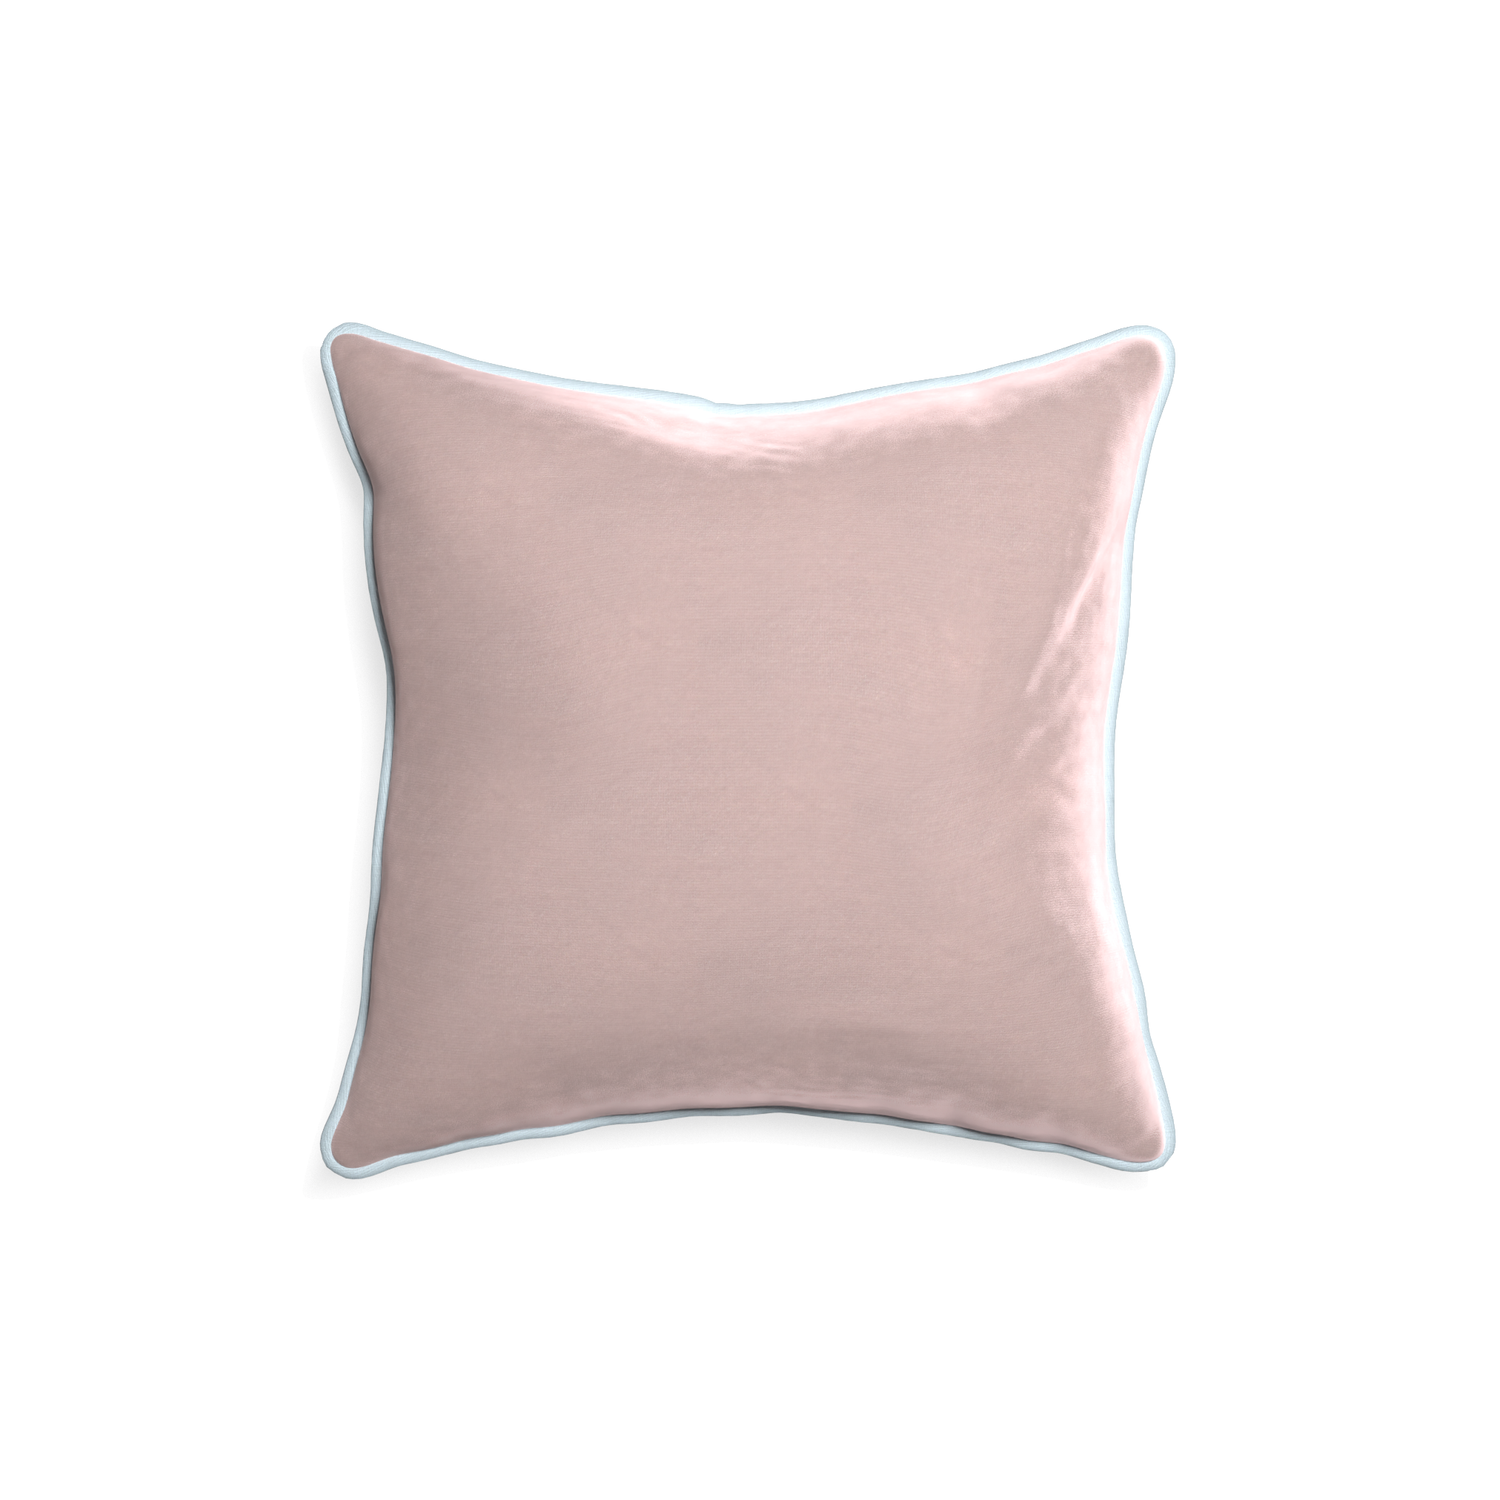 18-square rose velvet custom pillow with powder piping on white background